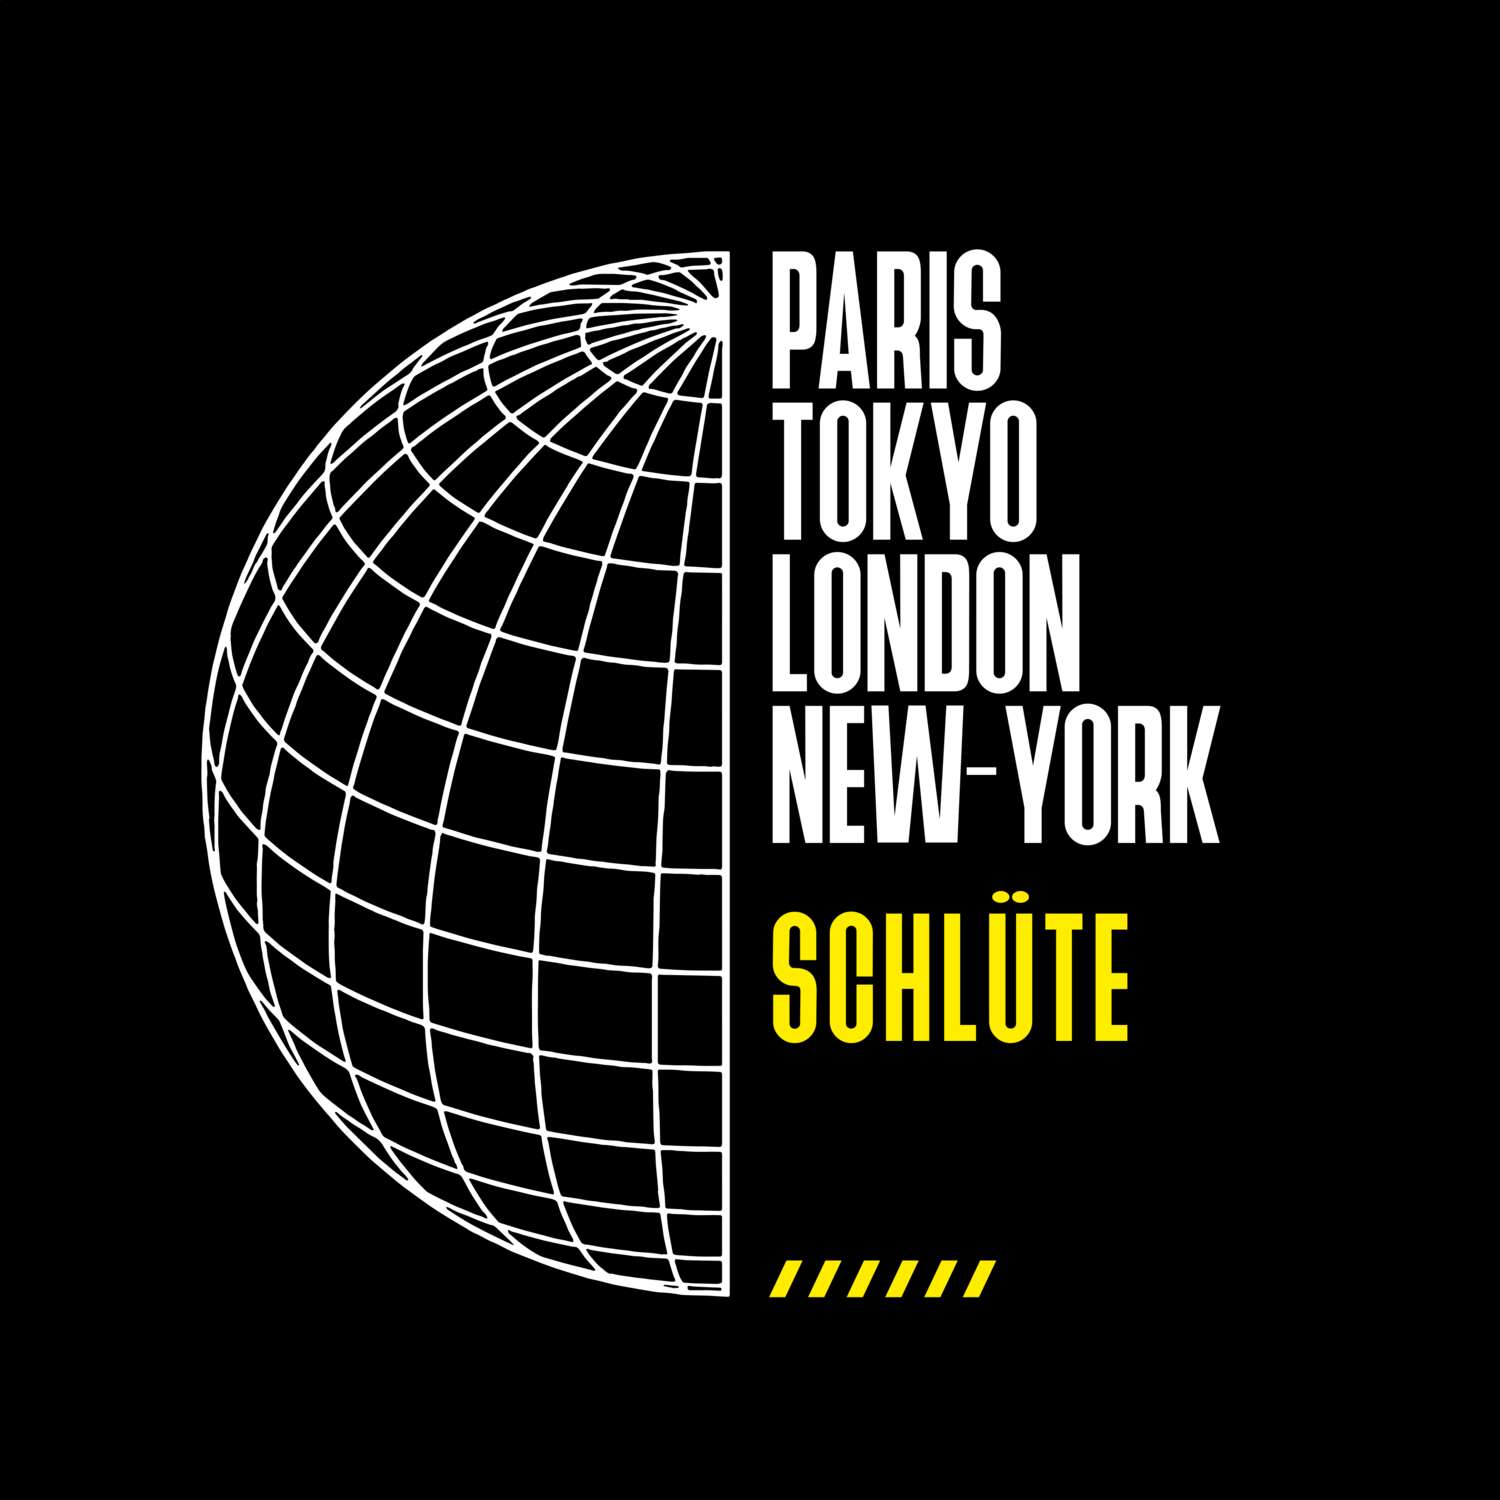 Schlüte T-Shirt »Paris Tokyo London«